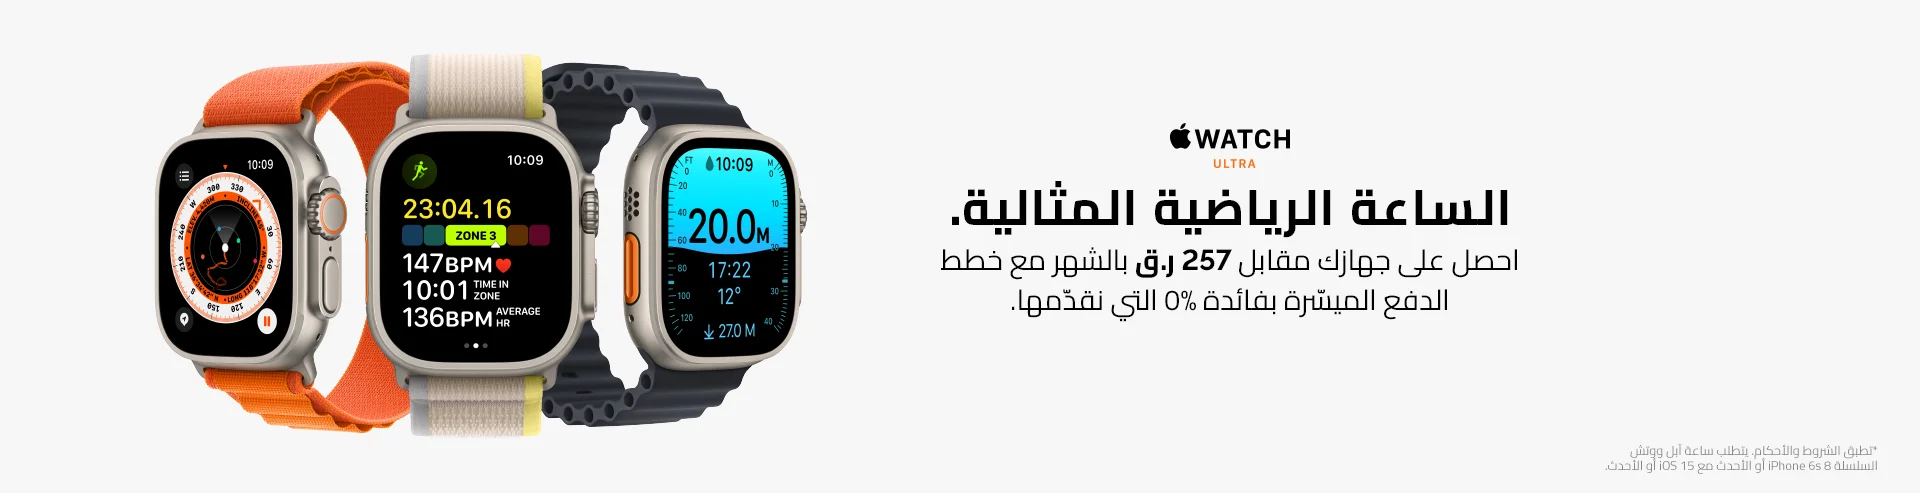 VM-Hero-Apple-Watch-8-EPP-Q2-23-EPP-Qatar-AR-1920x493 (003).webp